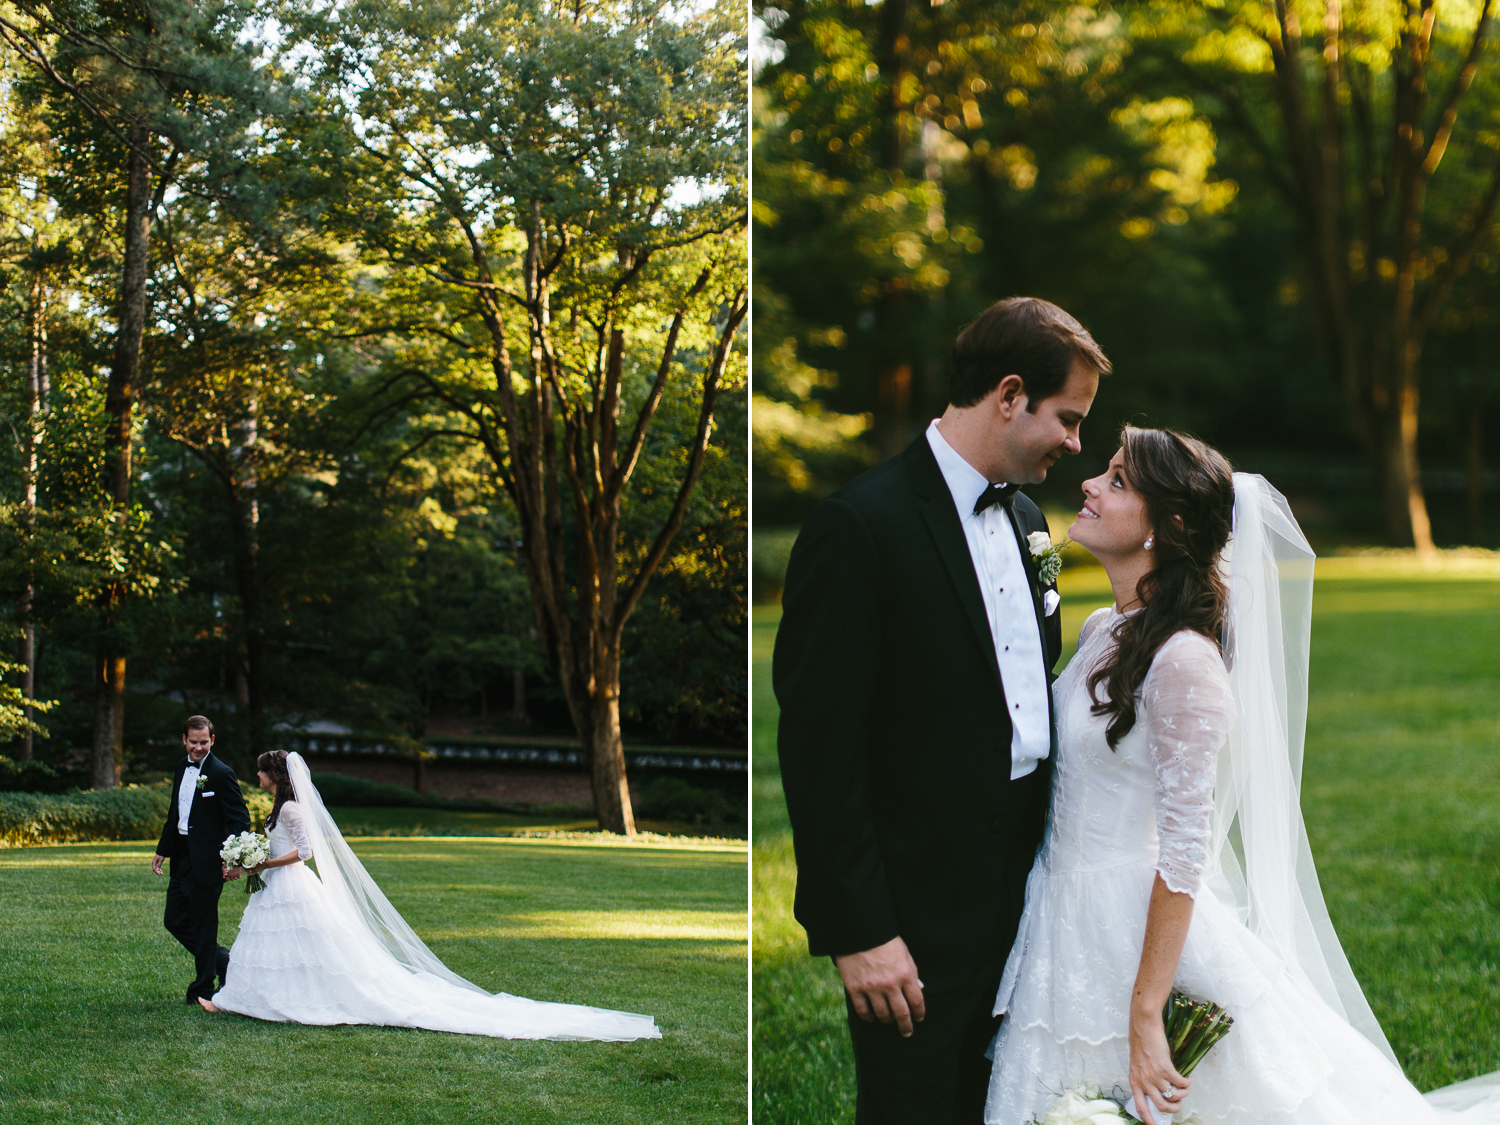 Beautiful outdoor bride and groom portraits